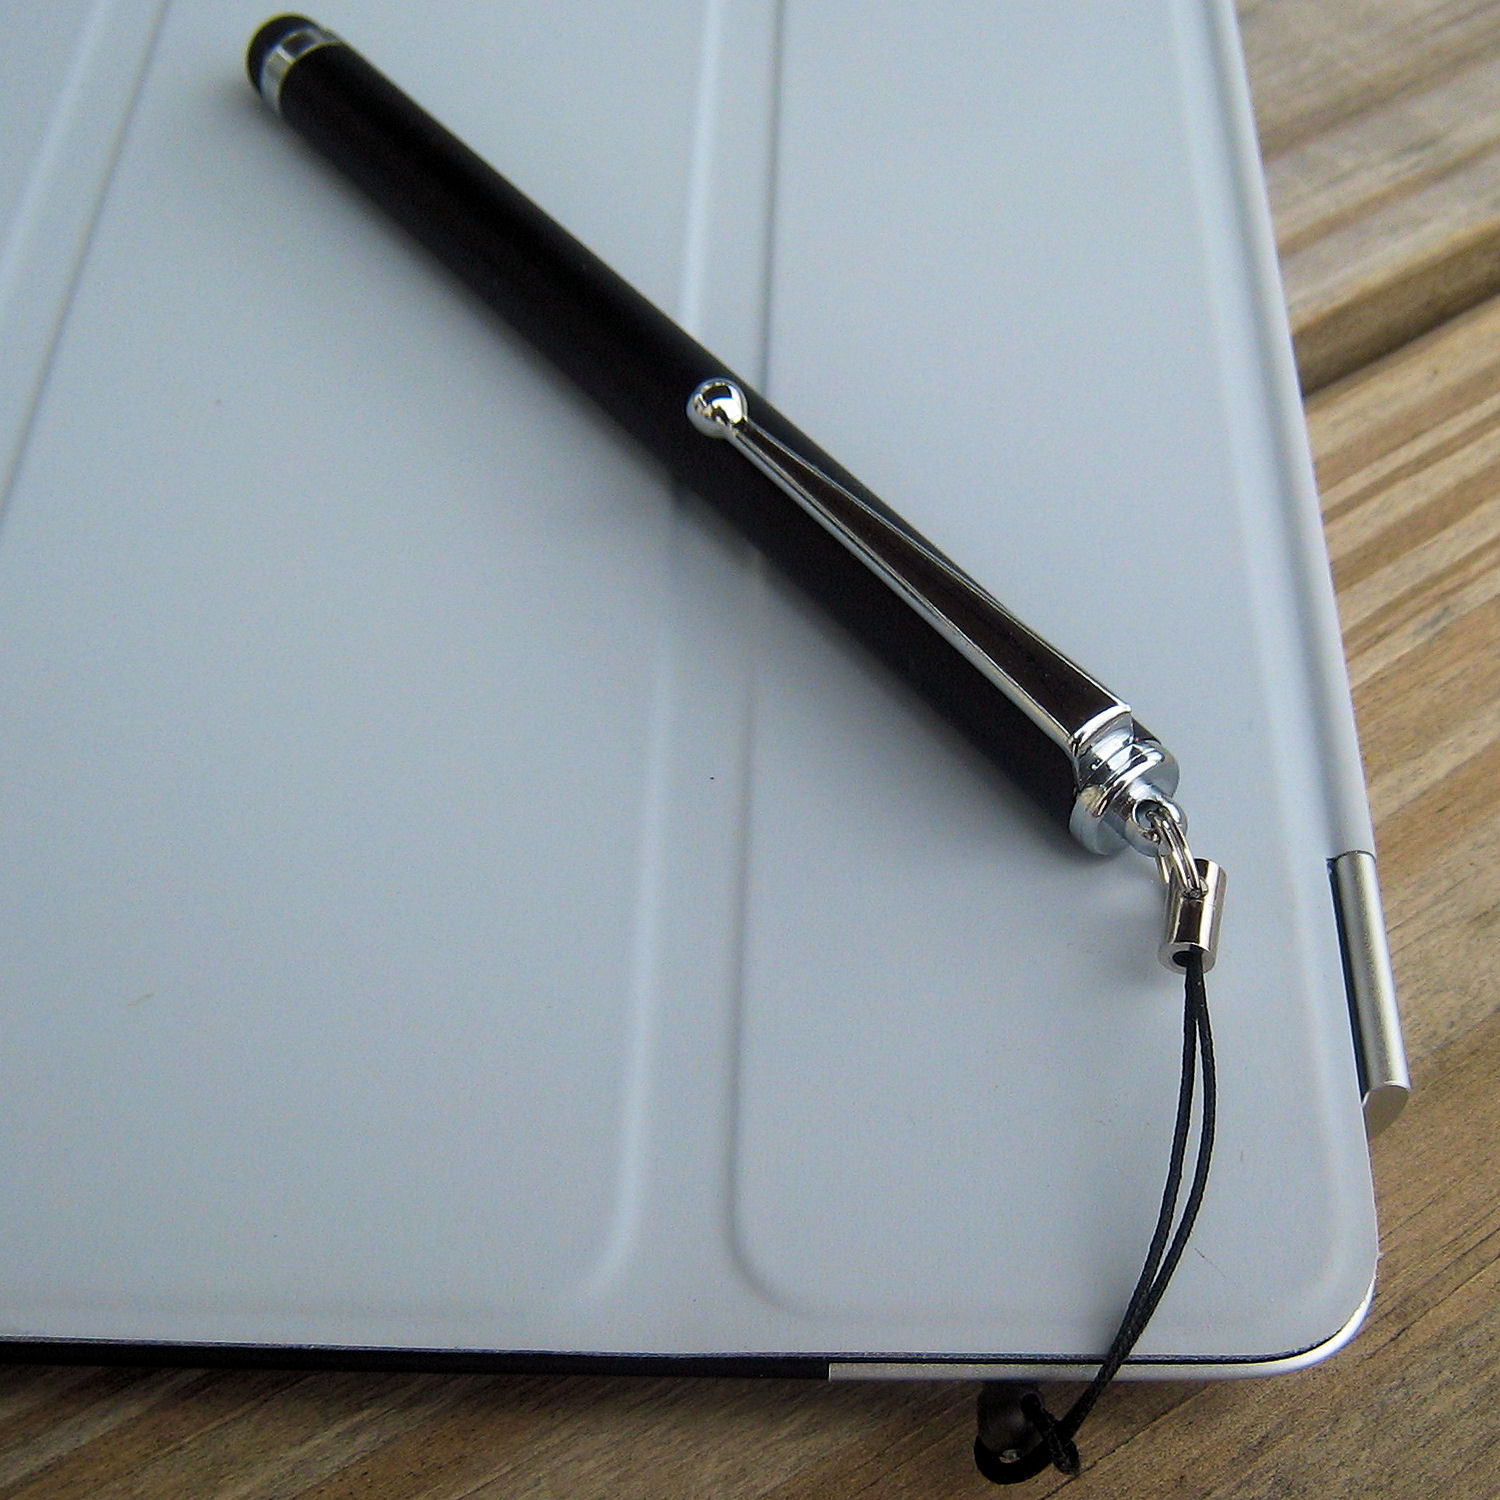 Gomadic Precision Tip Capacitive Stylus Pen designed for the LG C660 (Black Color) - Lifetime Warranty